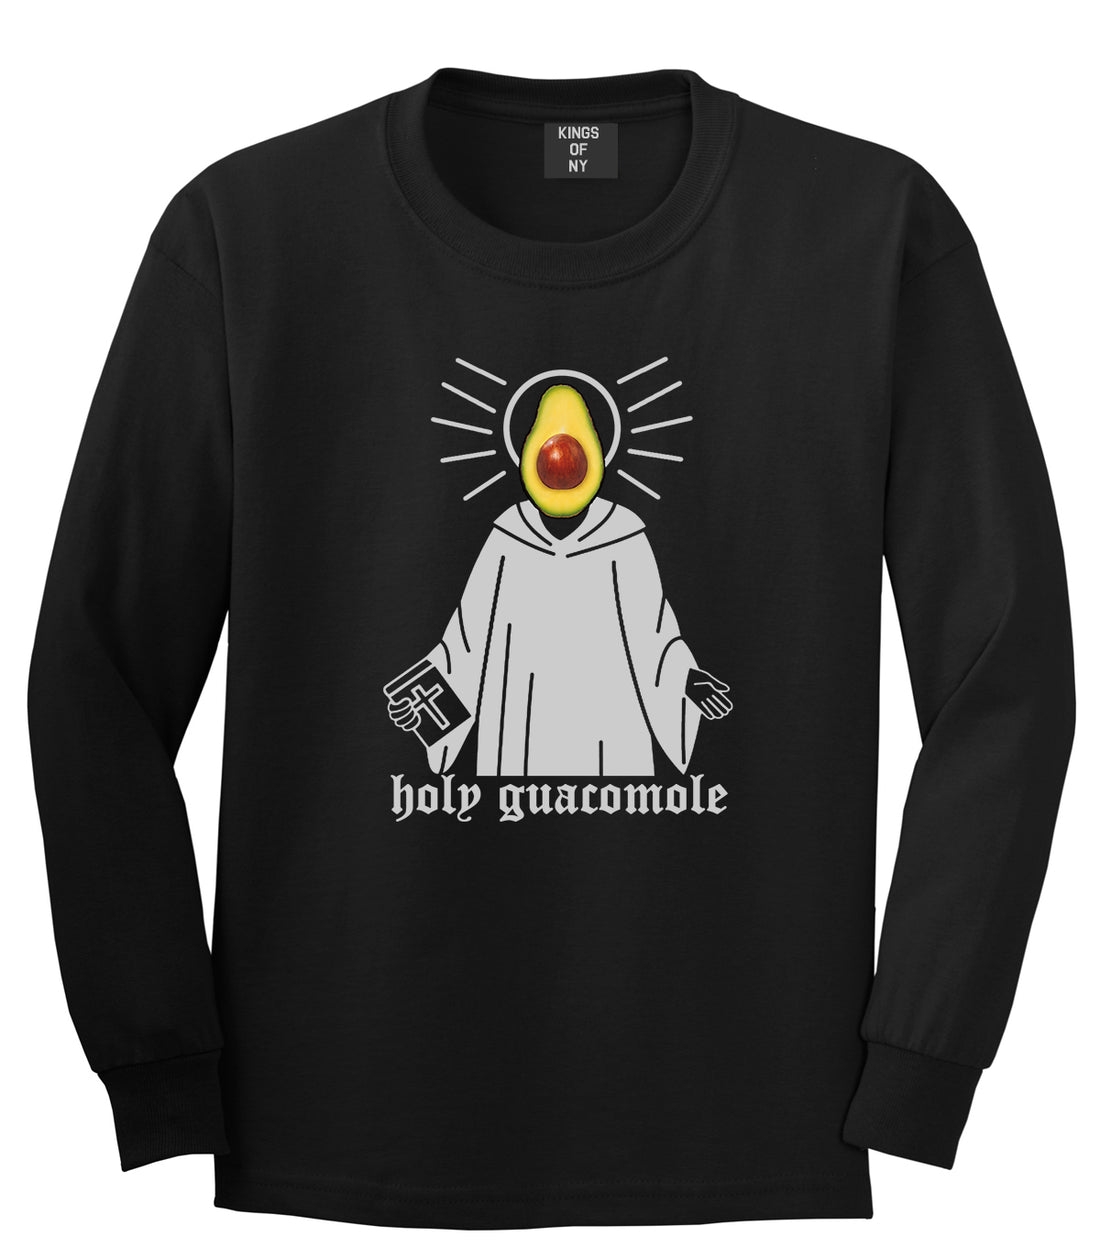 Holy Guacamole Funny Mens Long Sleeve T-Shirt Black